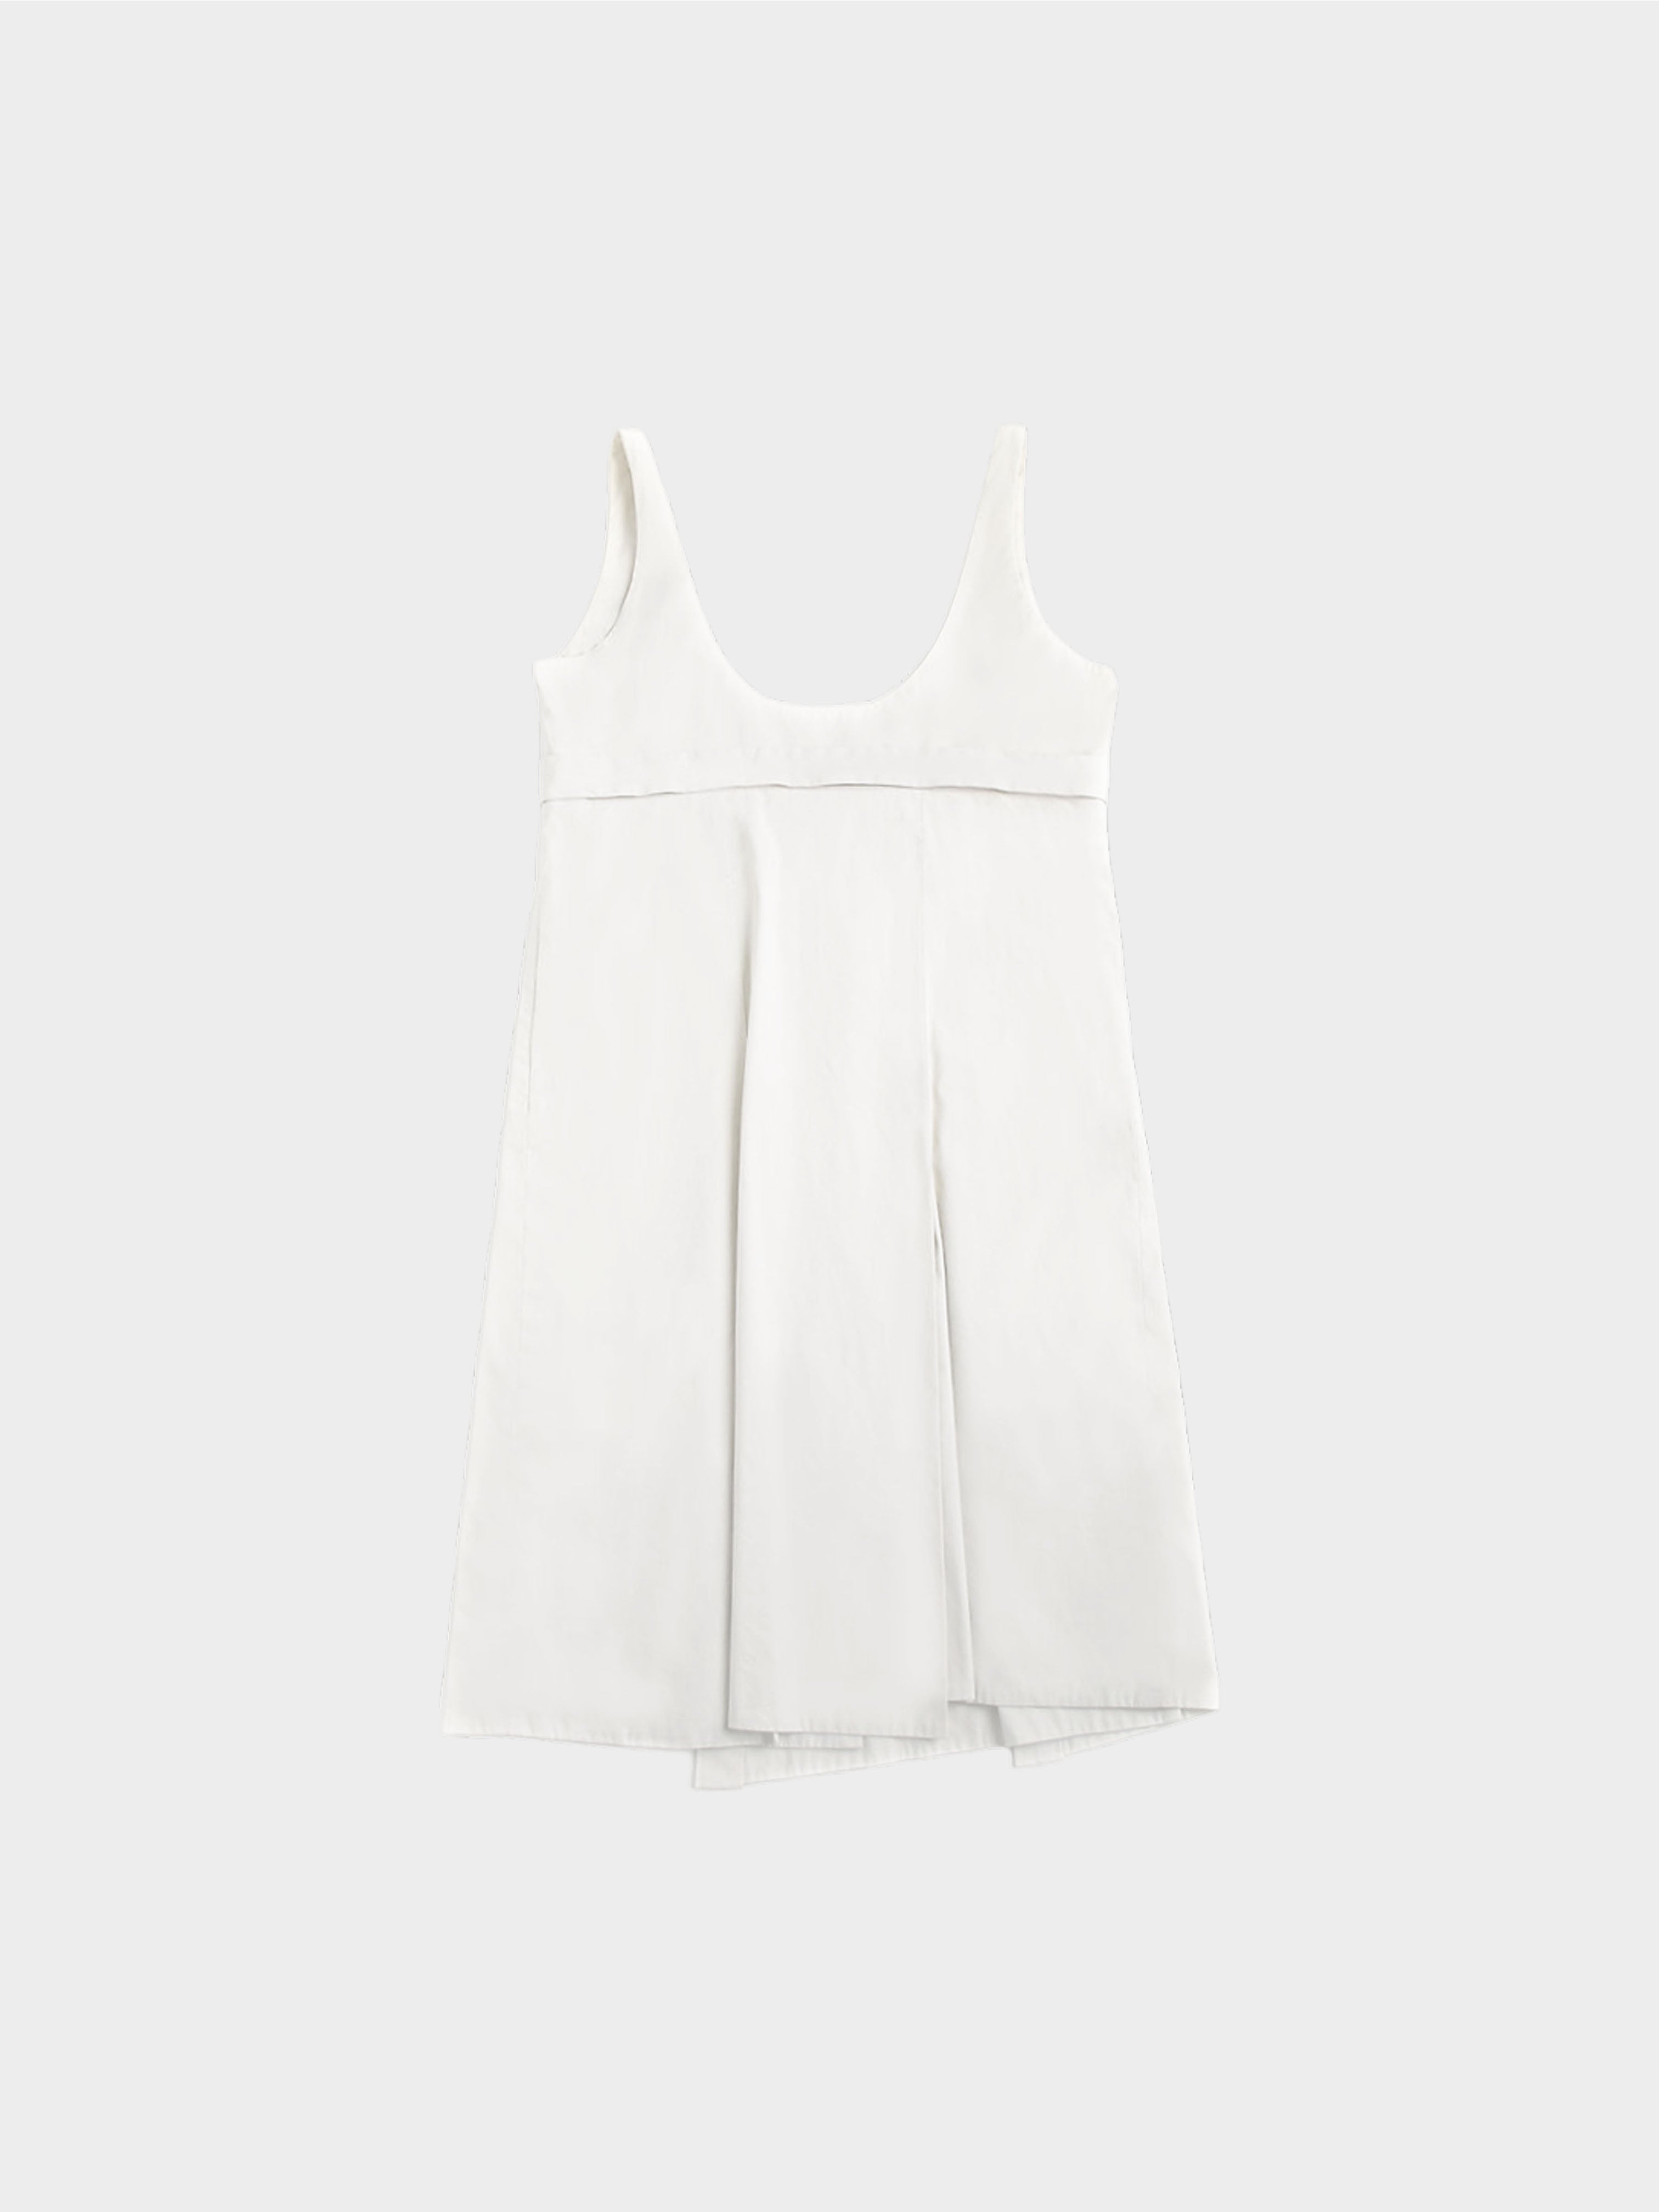 Prada SS 1999 Cream White Nylon Dress